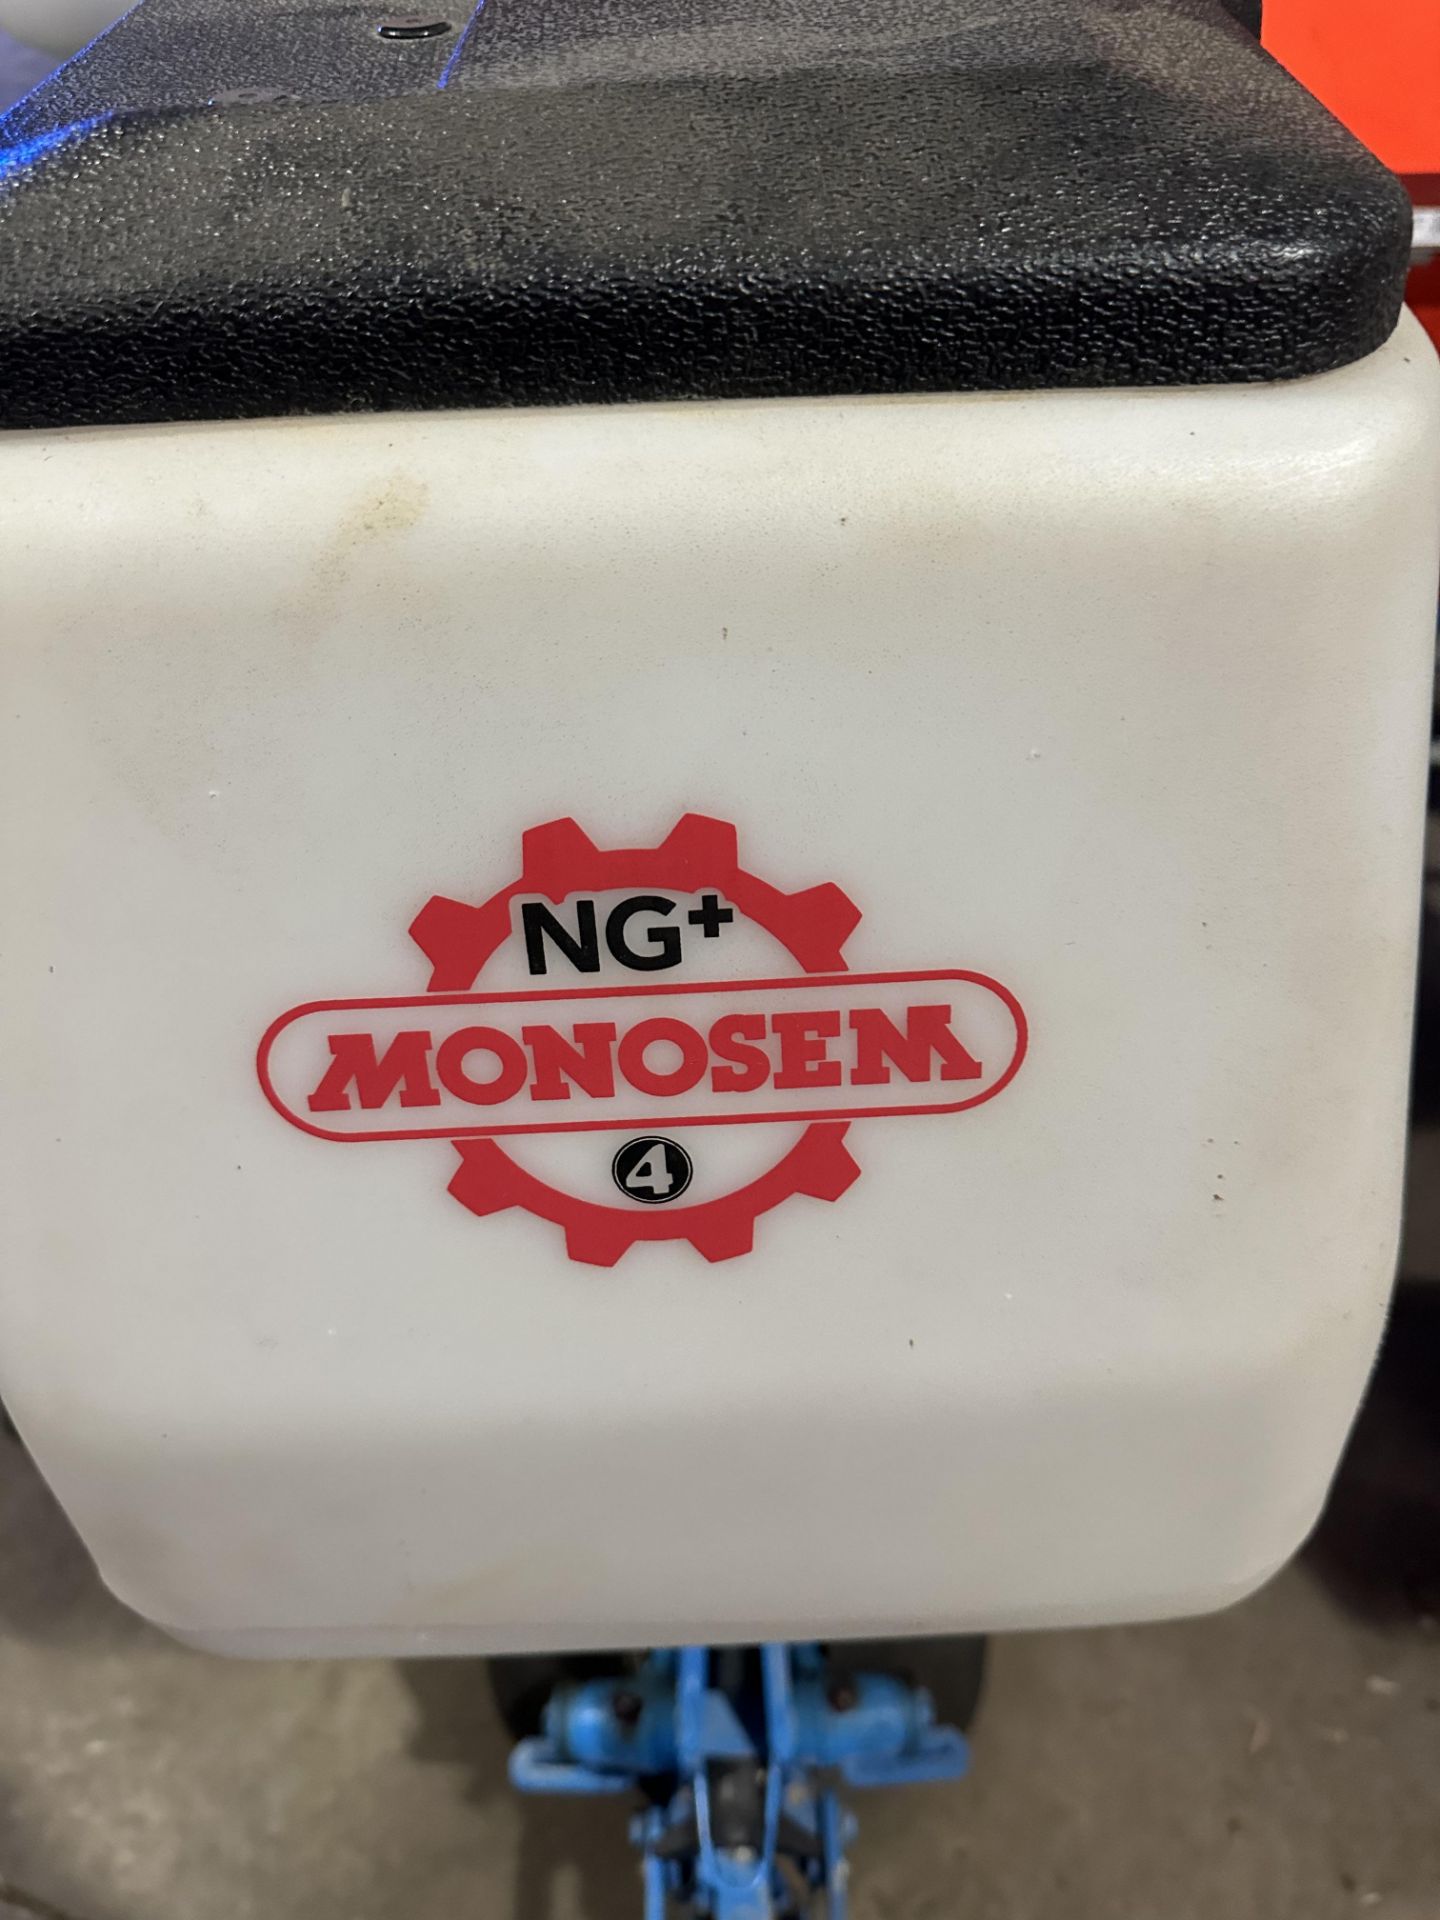 Monosem 2 Row Vacuum Planter with Hemp Seed Plates. Model NG Plus 4. - Image 6 of 7